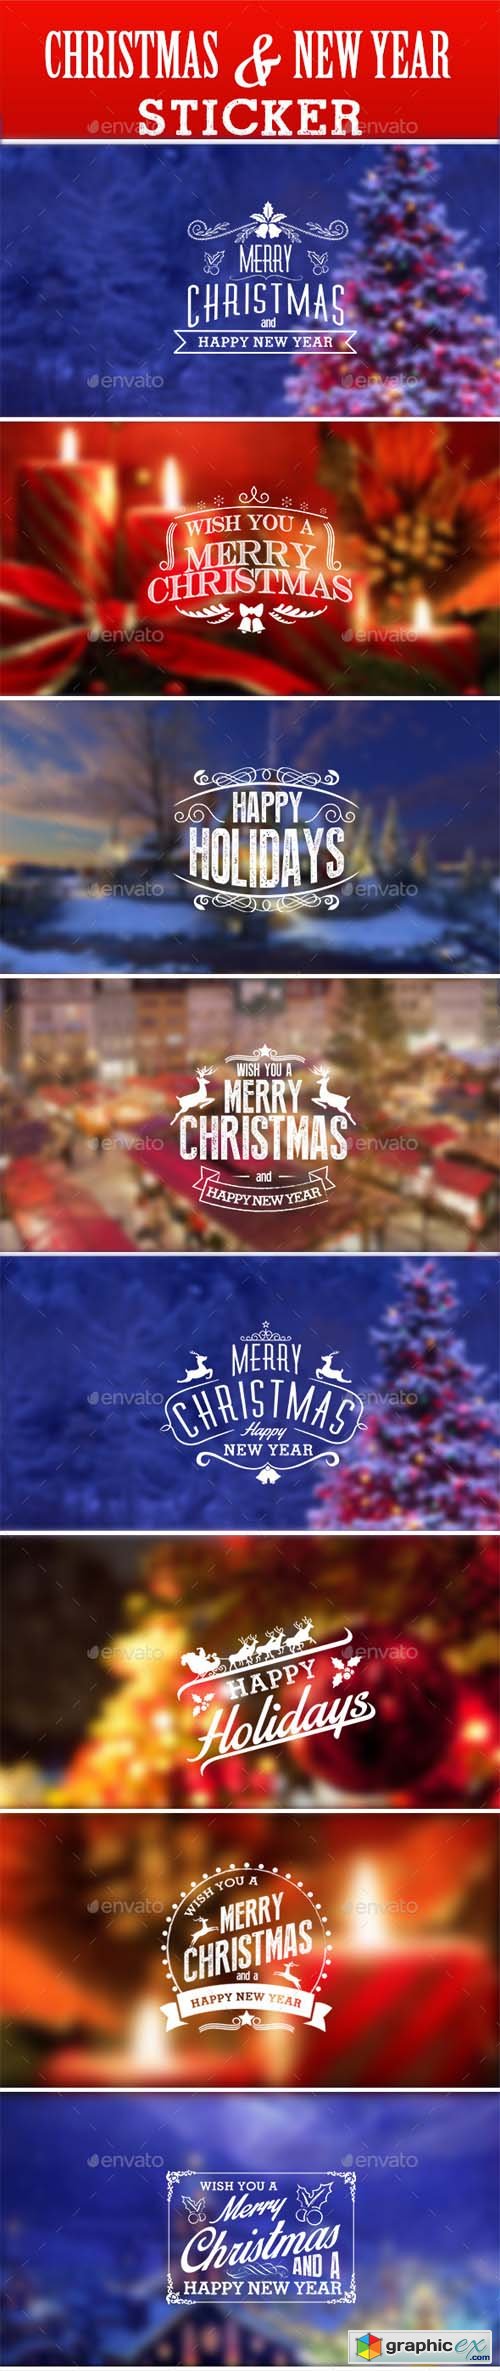 Christmas & New Year Sticker